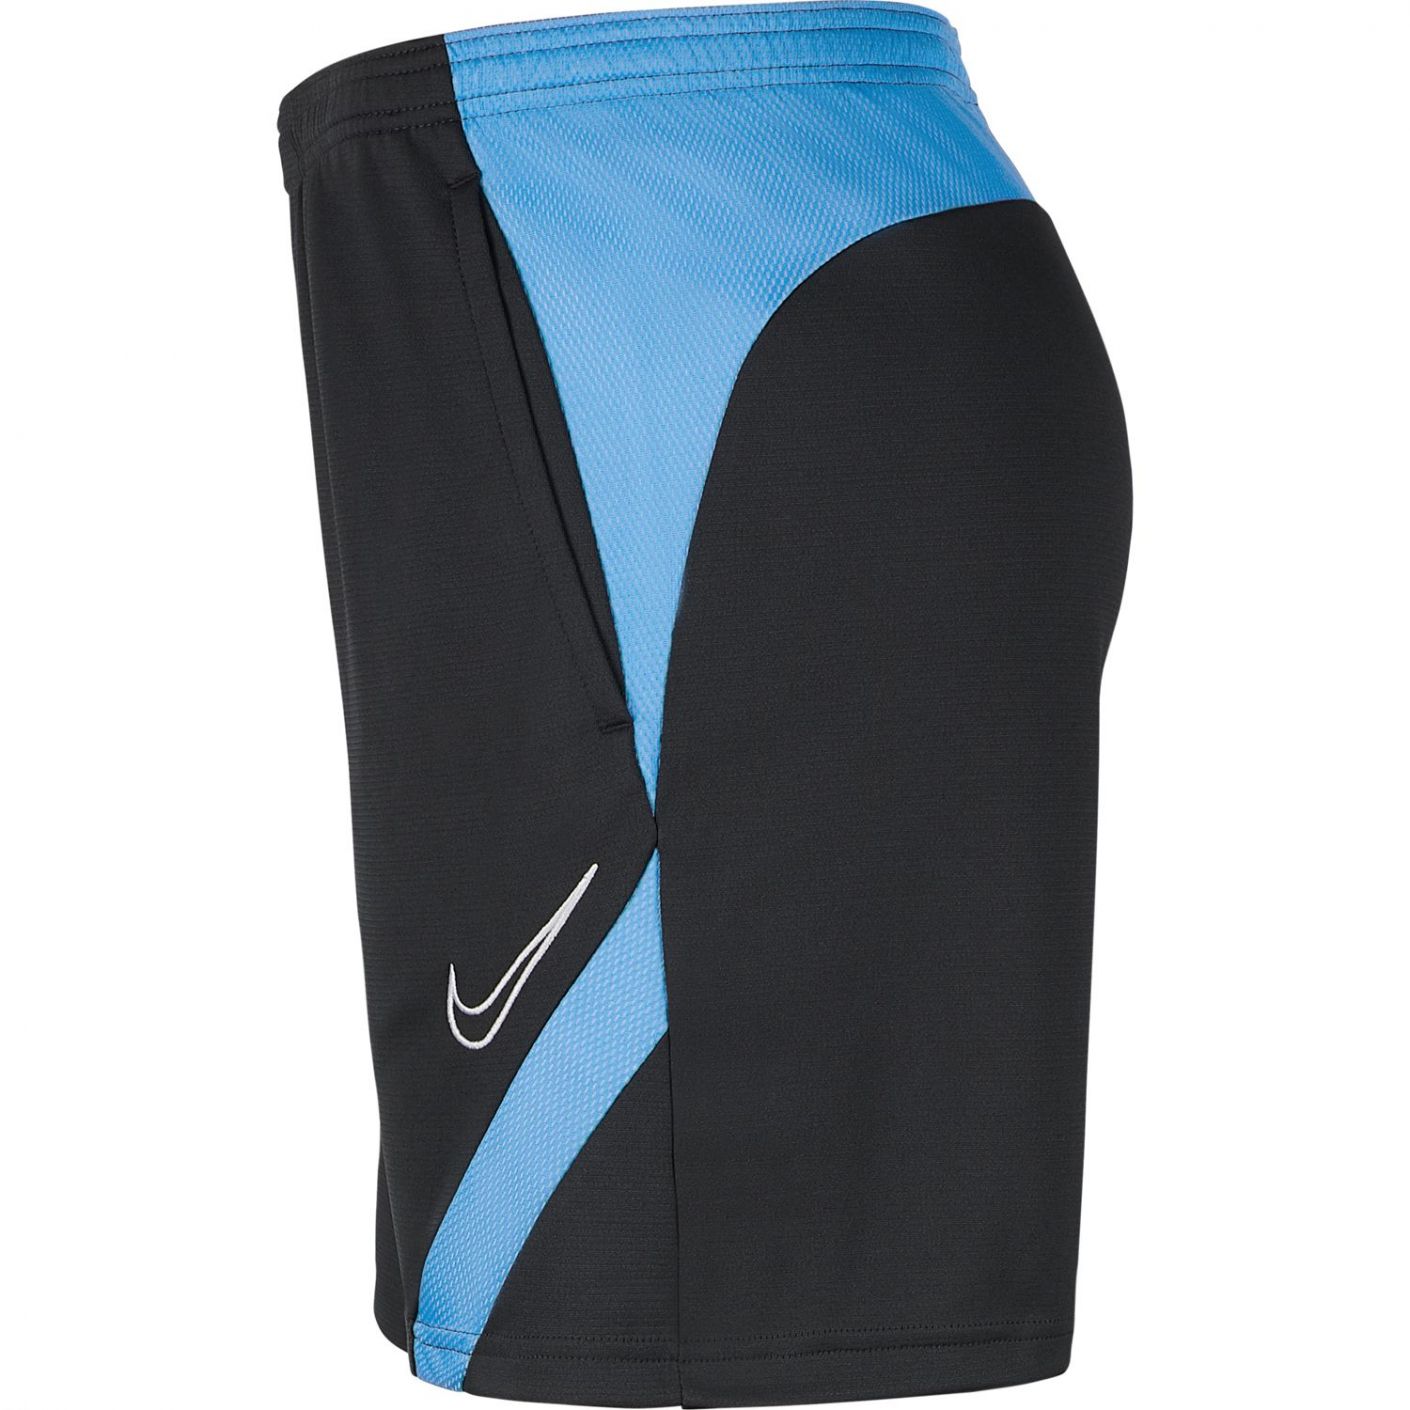 Nike Short Dri-Fit Academy con Tasche Nero-Blu